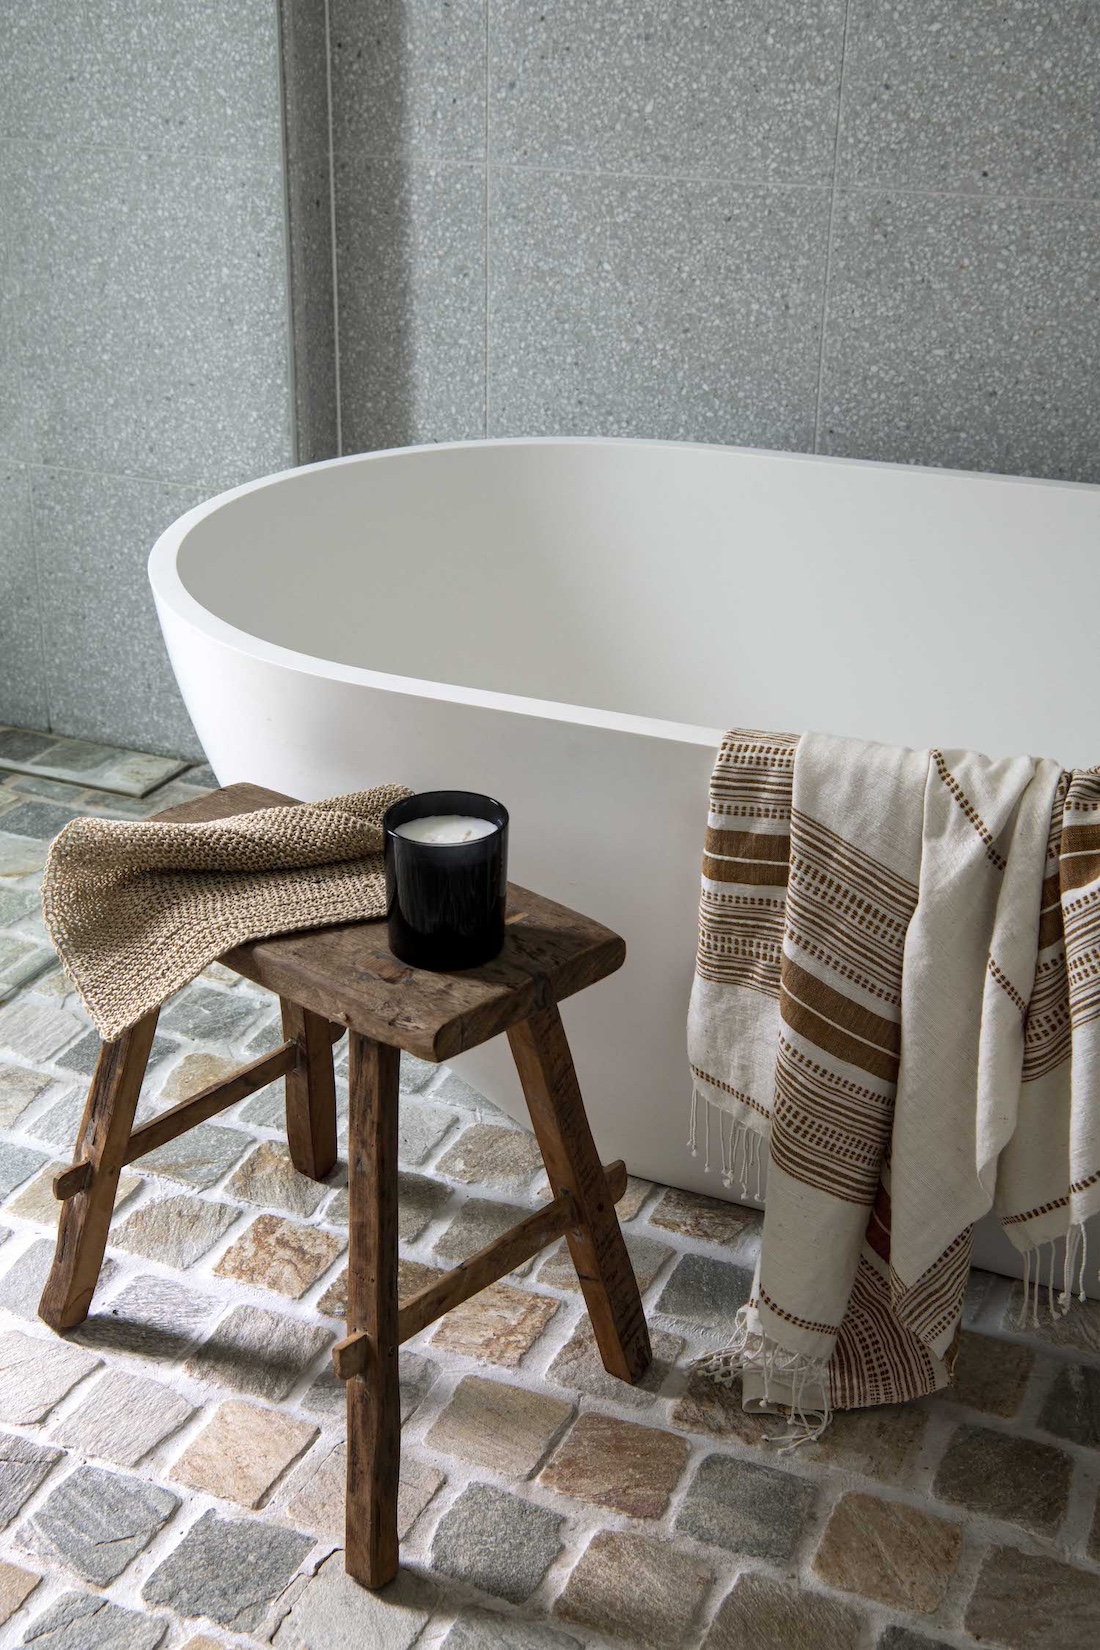 Standalone white bath with cobblestone flooring